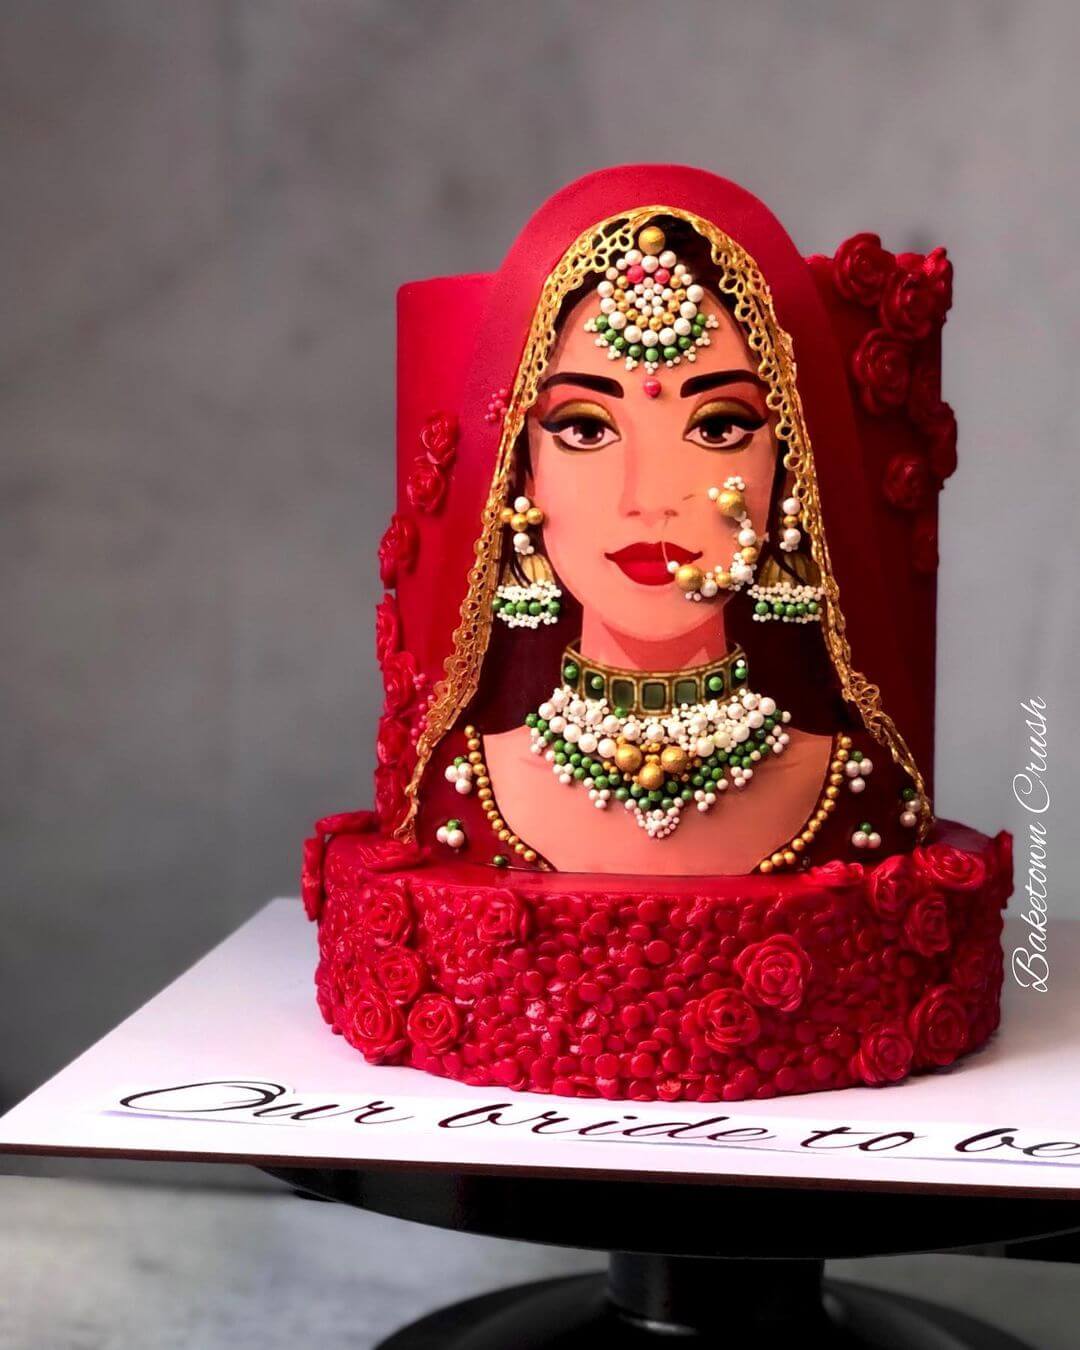 Unique Bridal-Themed Wedding Cake